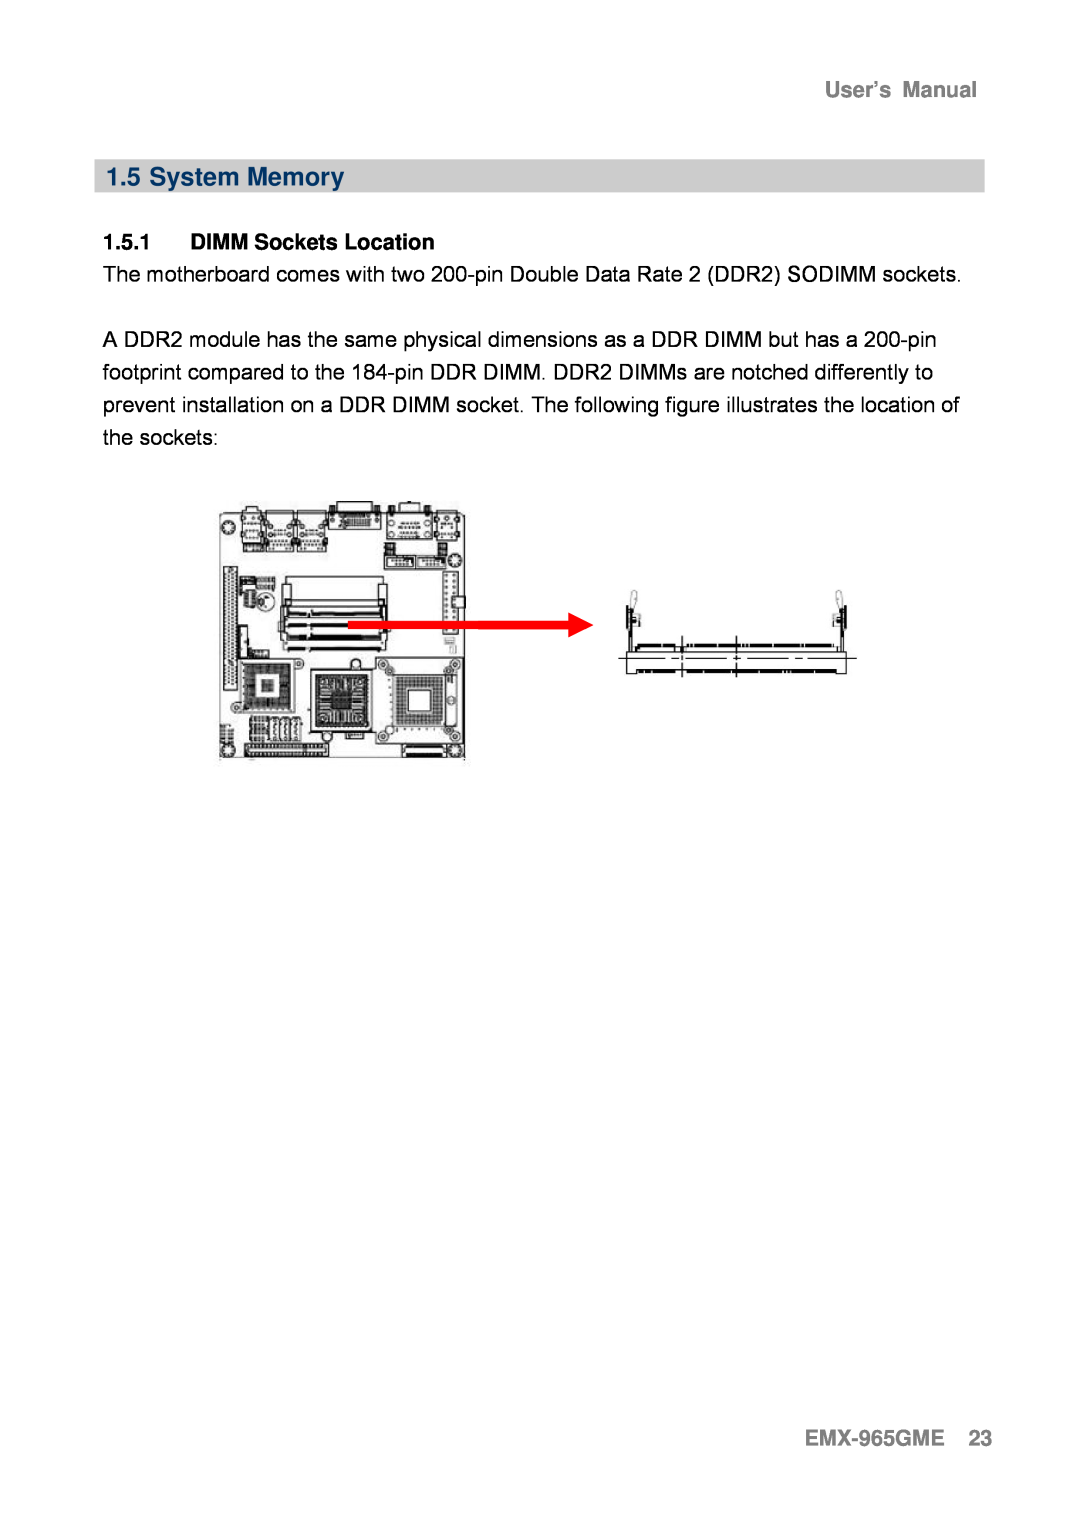 Intel user manual System Memory, 1.5.1DIMM Sockets Location, EMX-965GME23, User’s Manual 